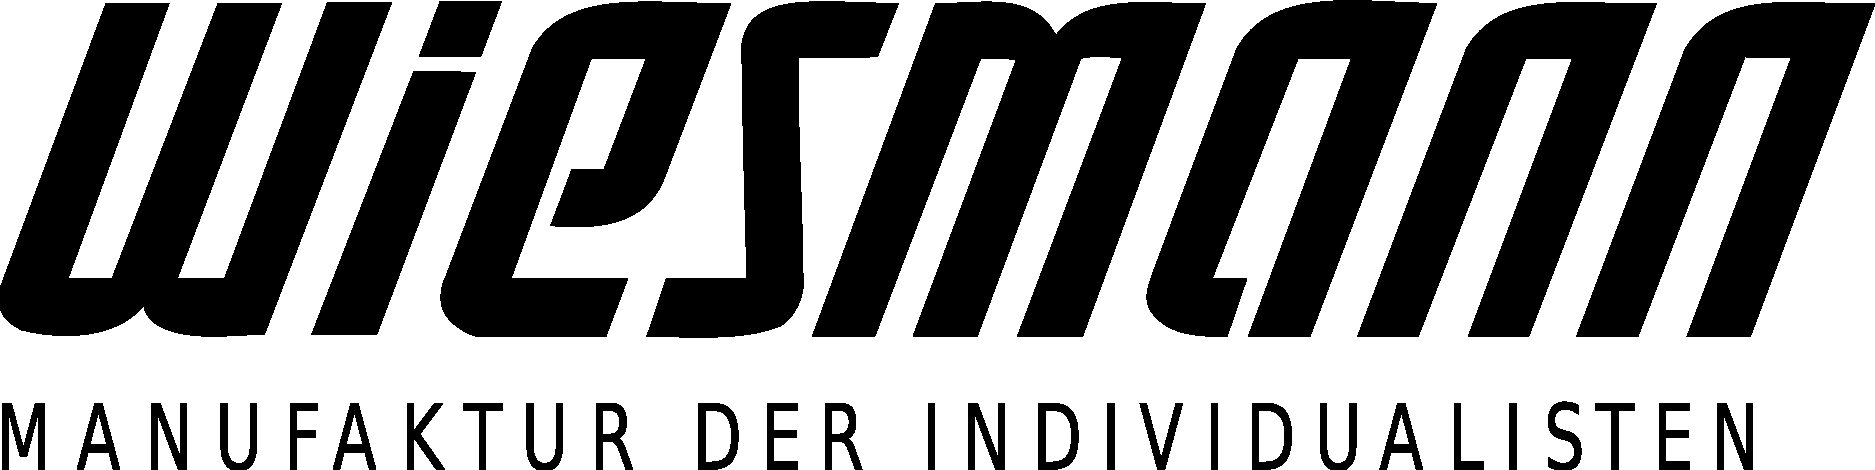 Wiesmann Wordmark Logo Vector